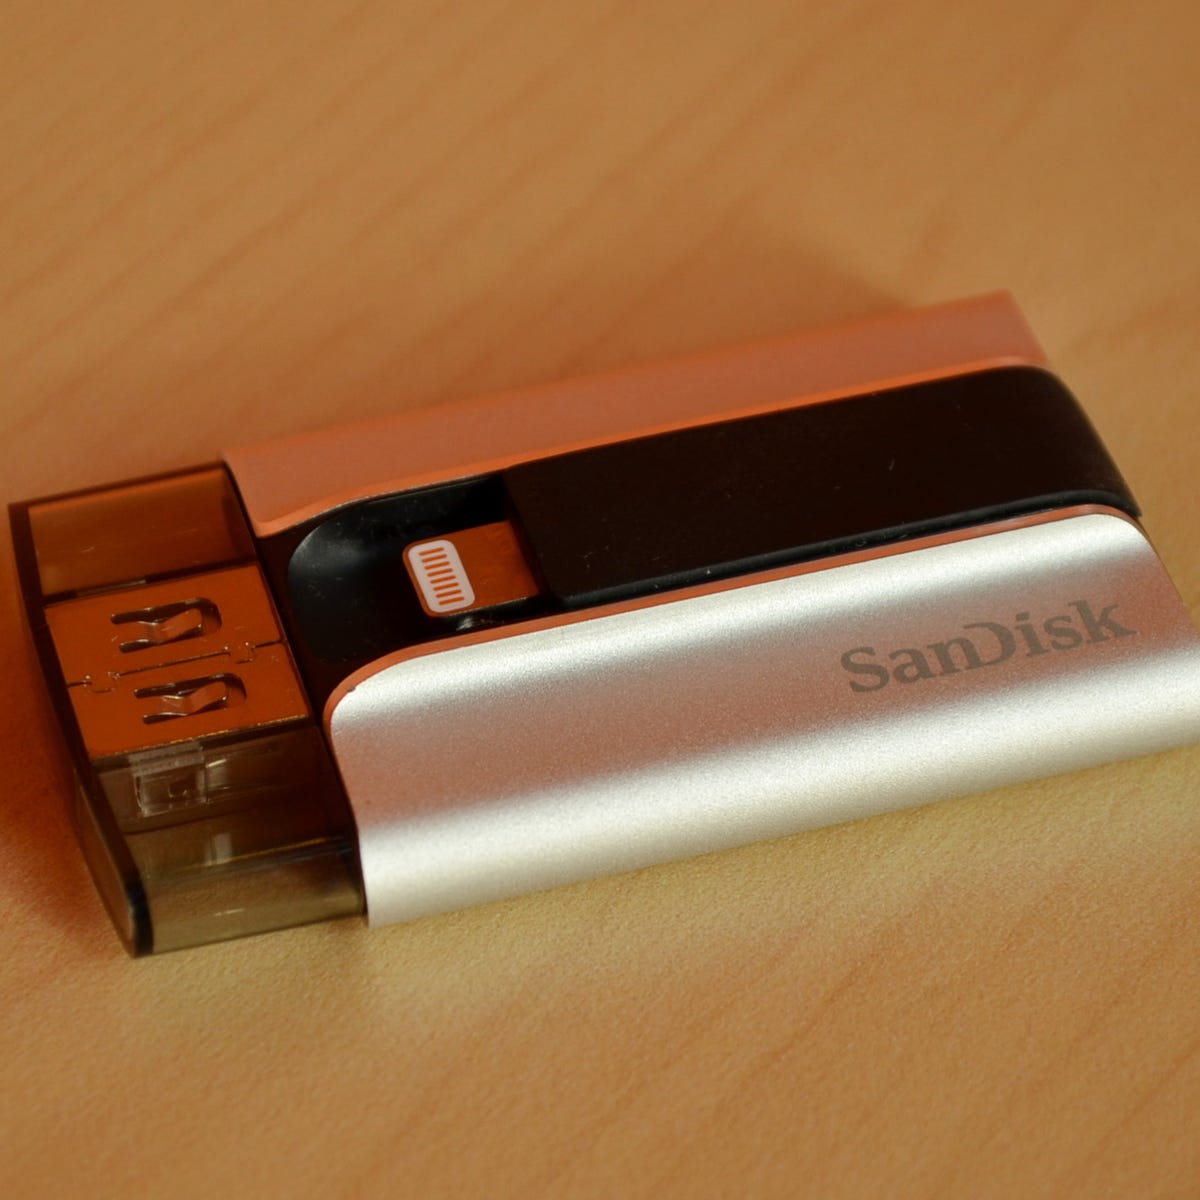 SanDisk iXpand Flash Drive review: Your iPad's best friend - CNET